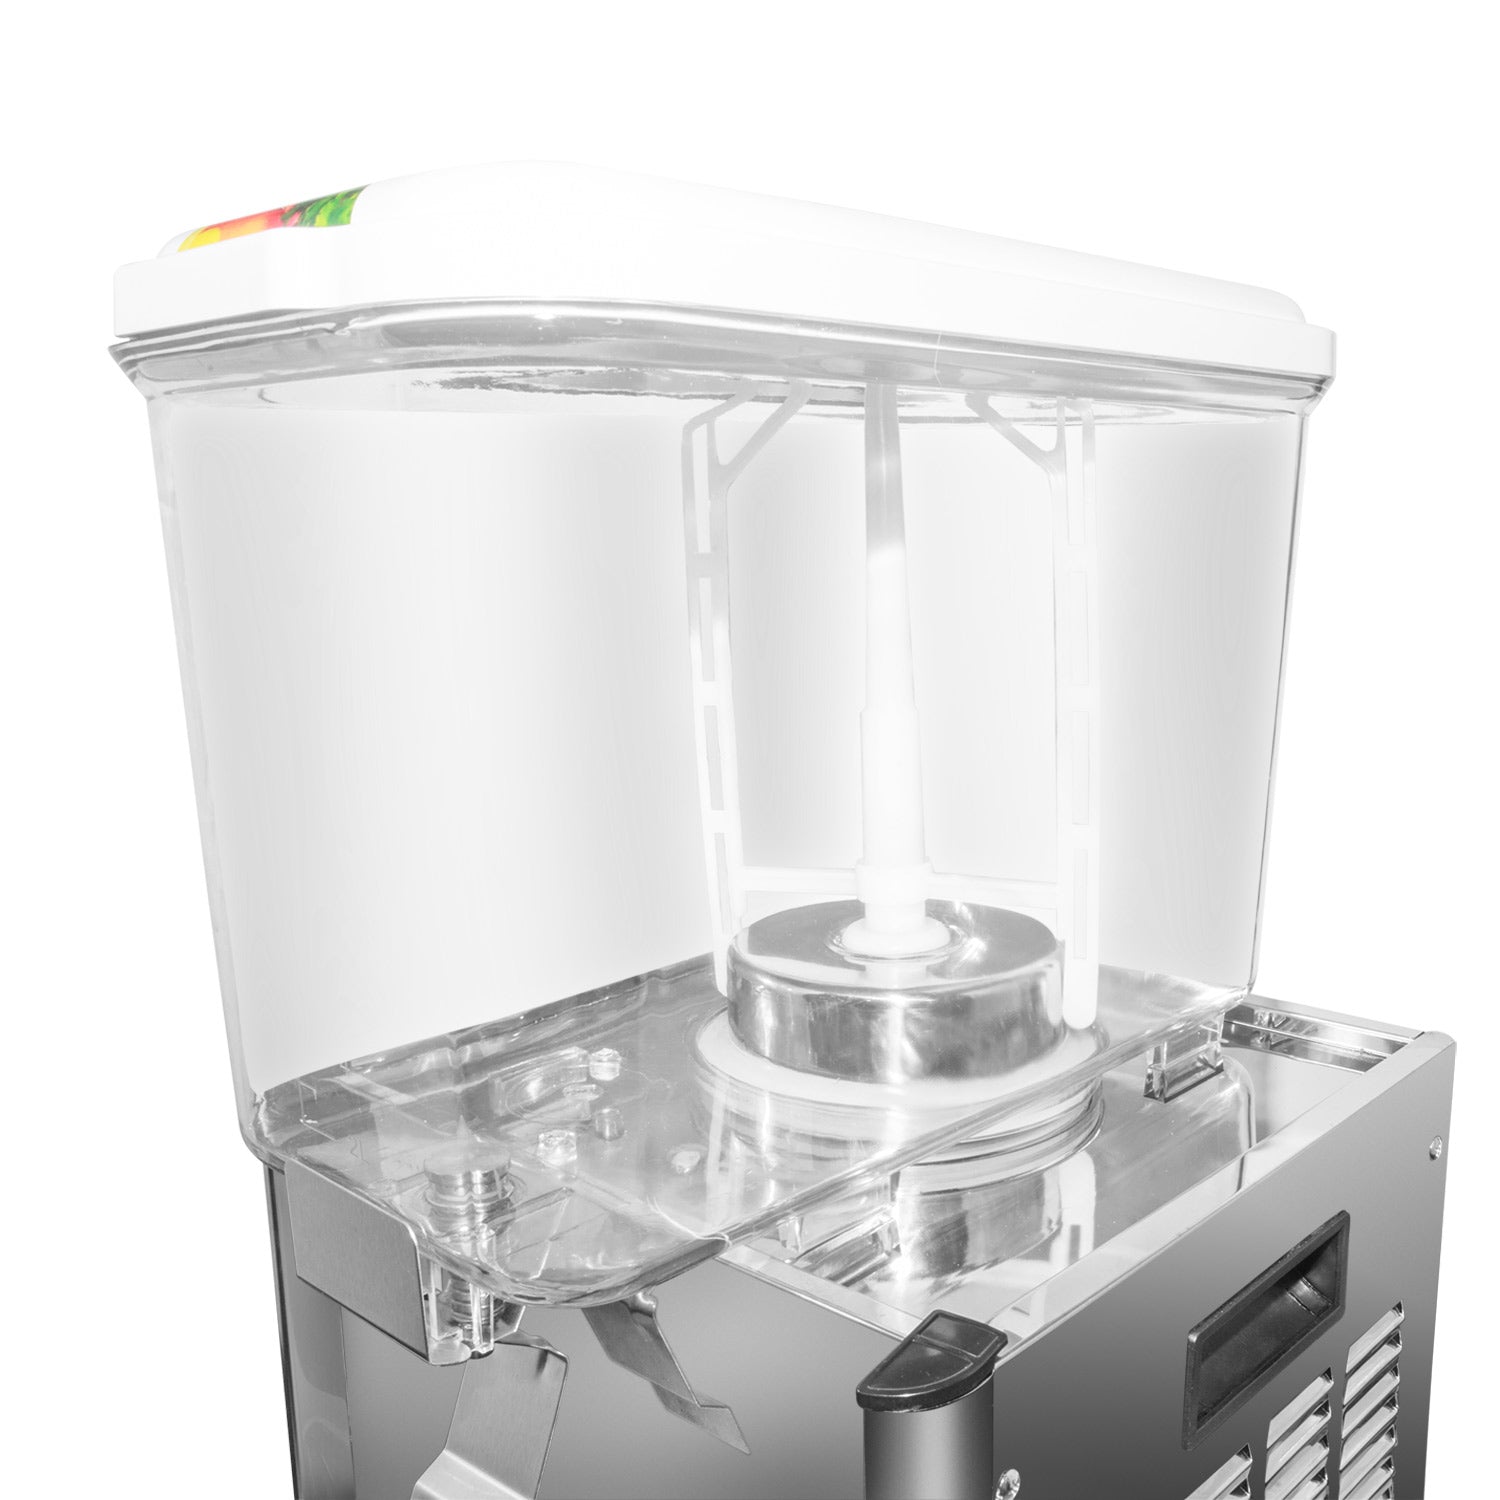 A-DG6LYJ1 Electric Juice Dispenser | 18 L | 1 Tank | Cold Drink Dispenser